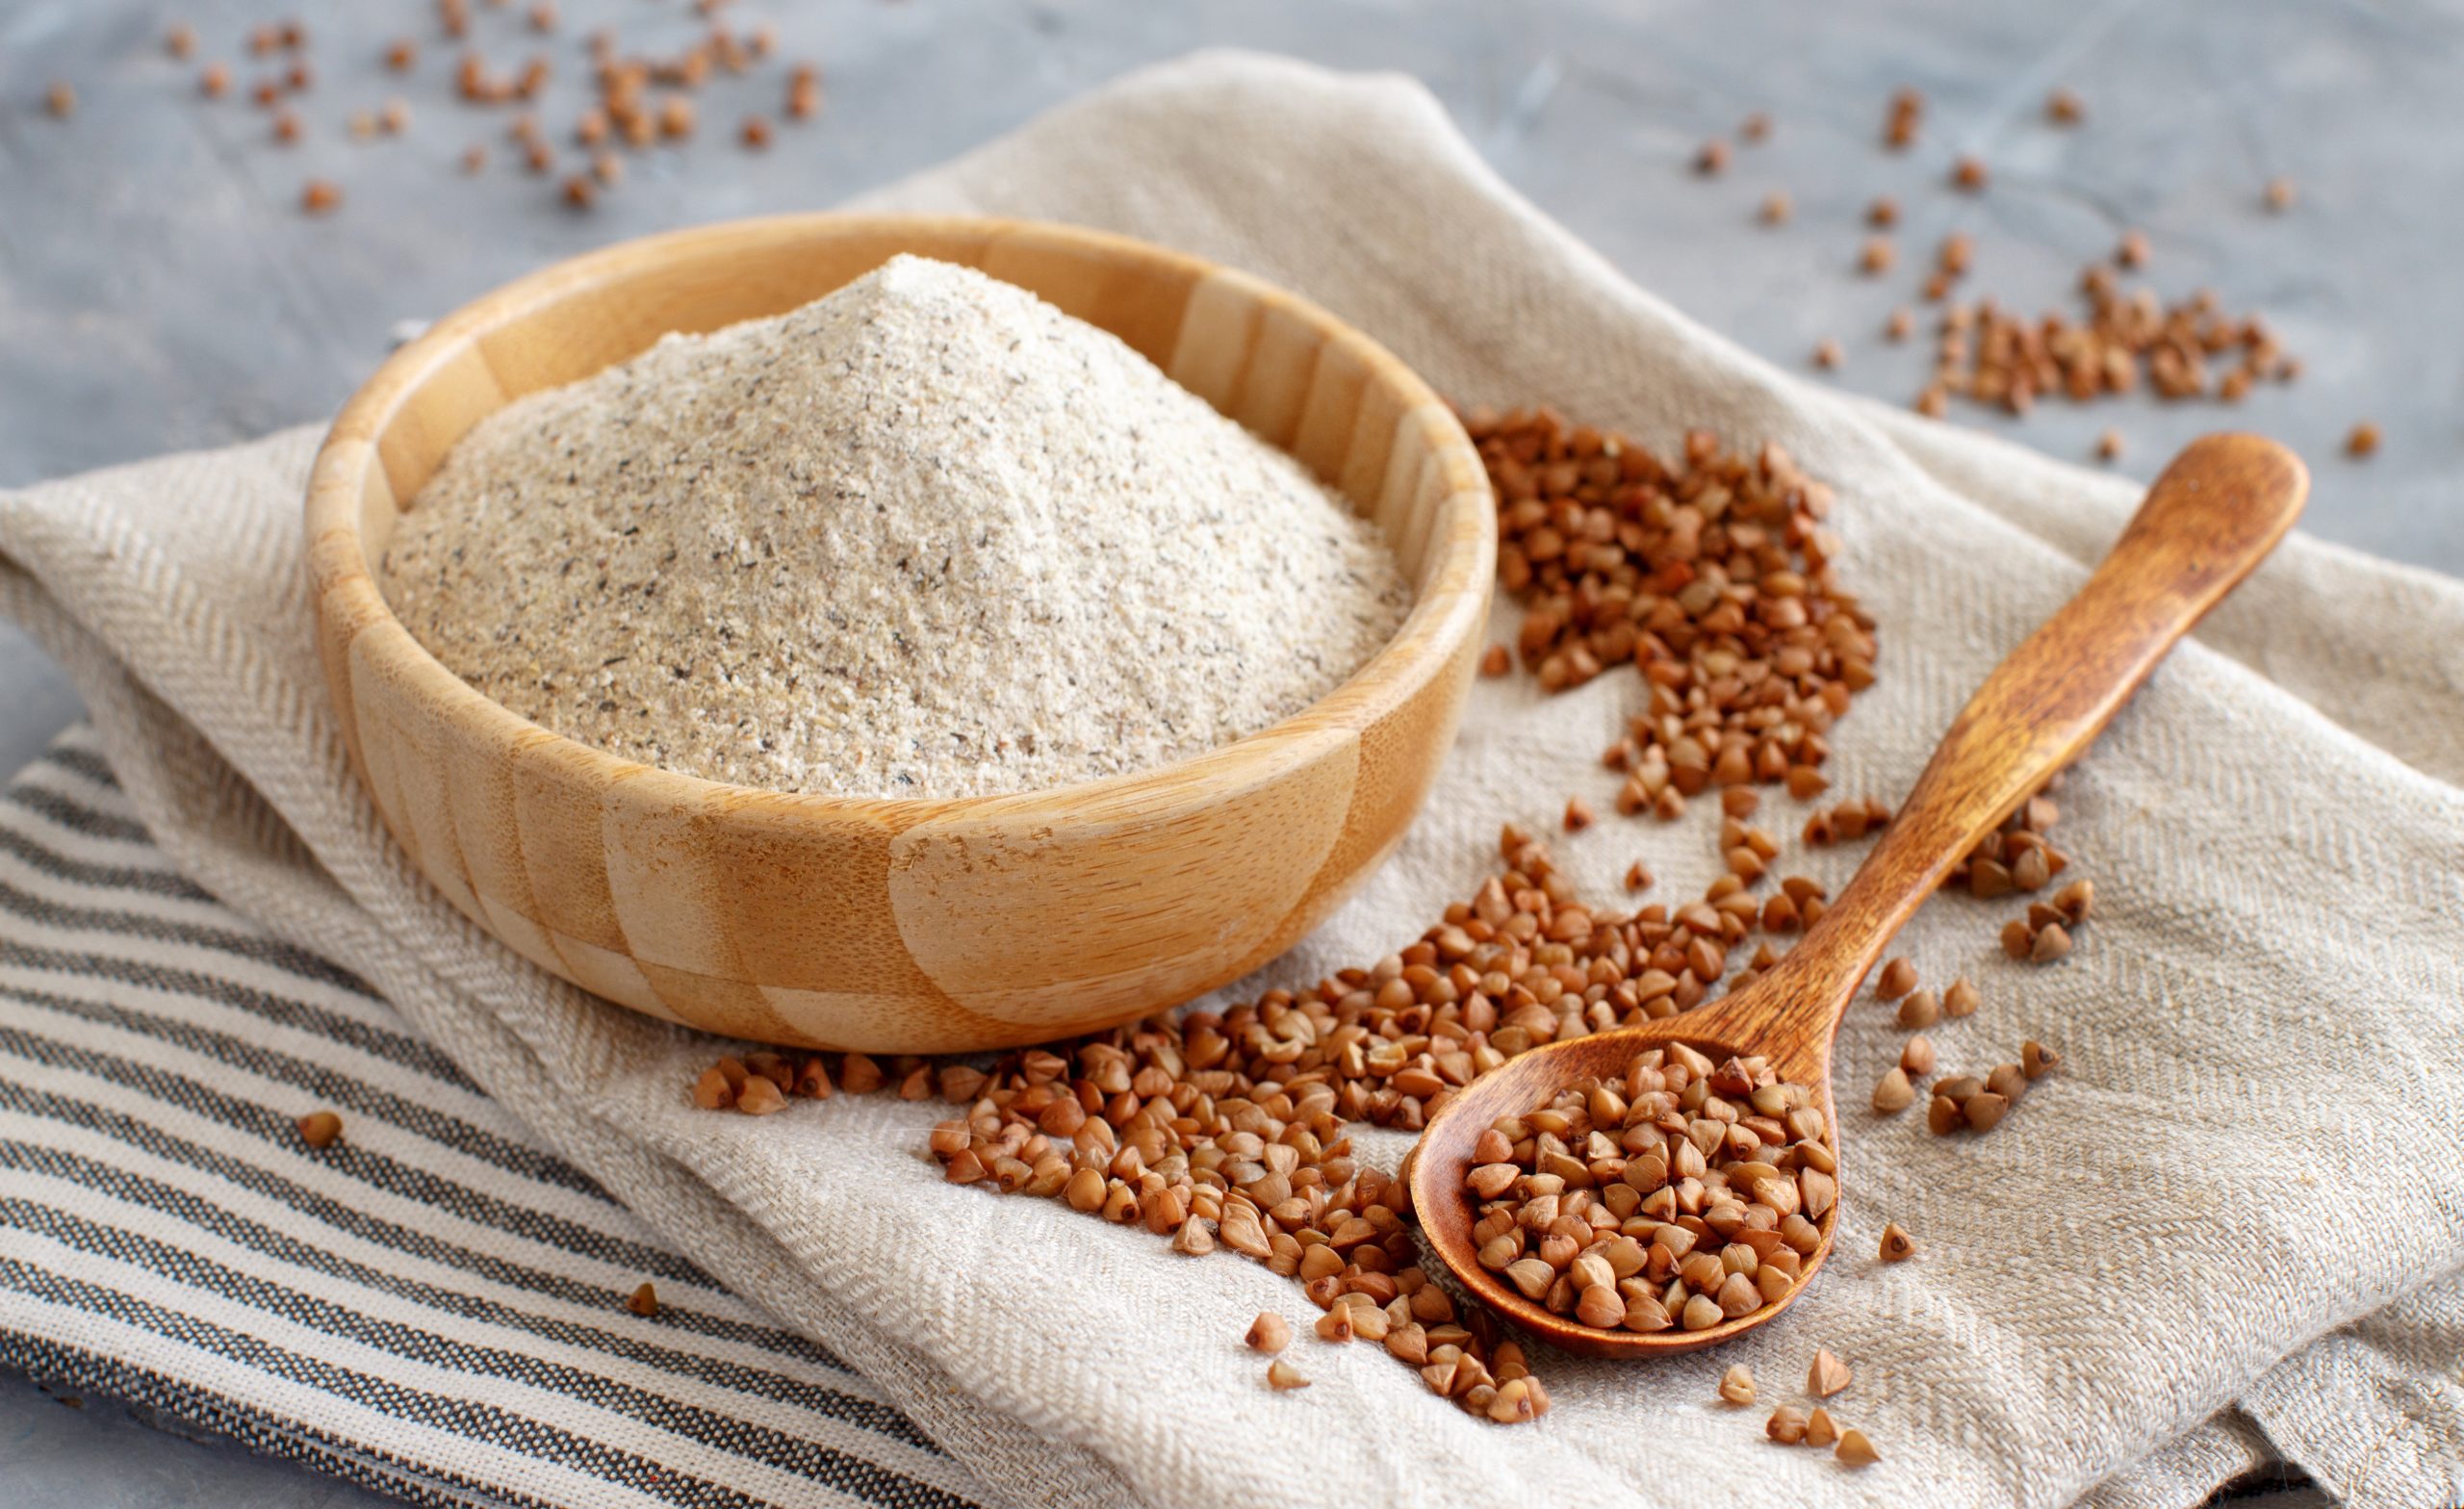 Buckwheat,Flour,In,A,Bowl,And,Buckwheat,Grain,In,A